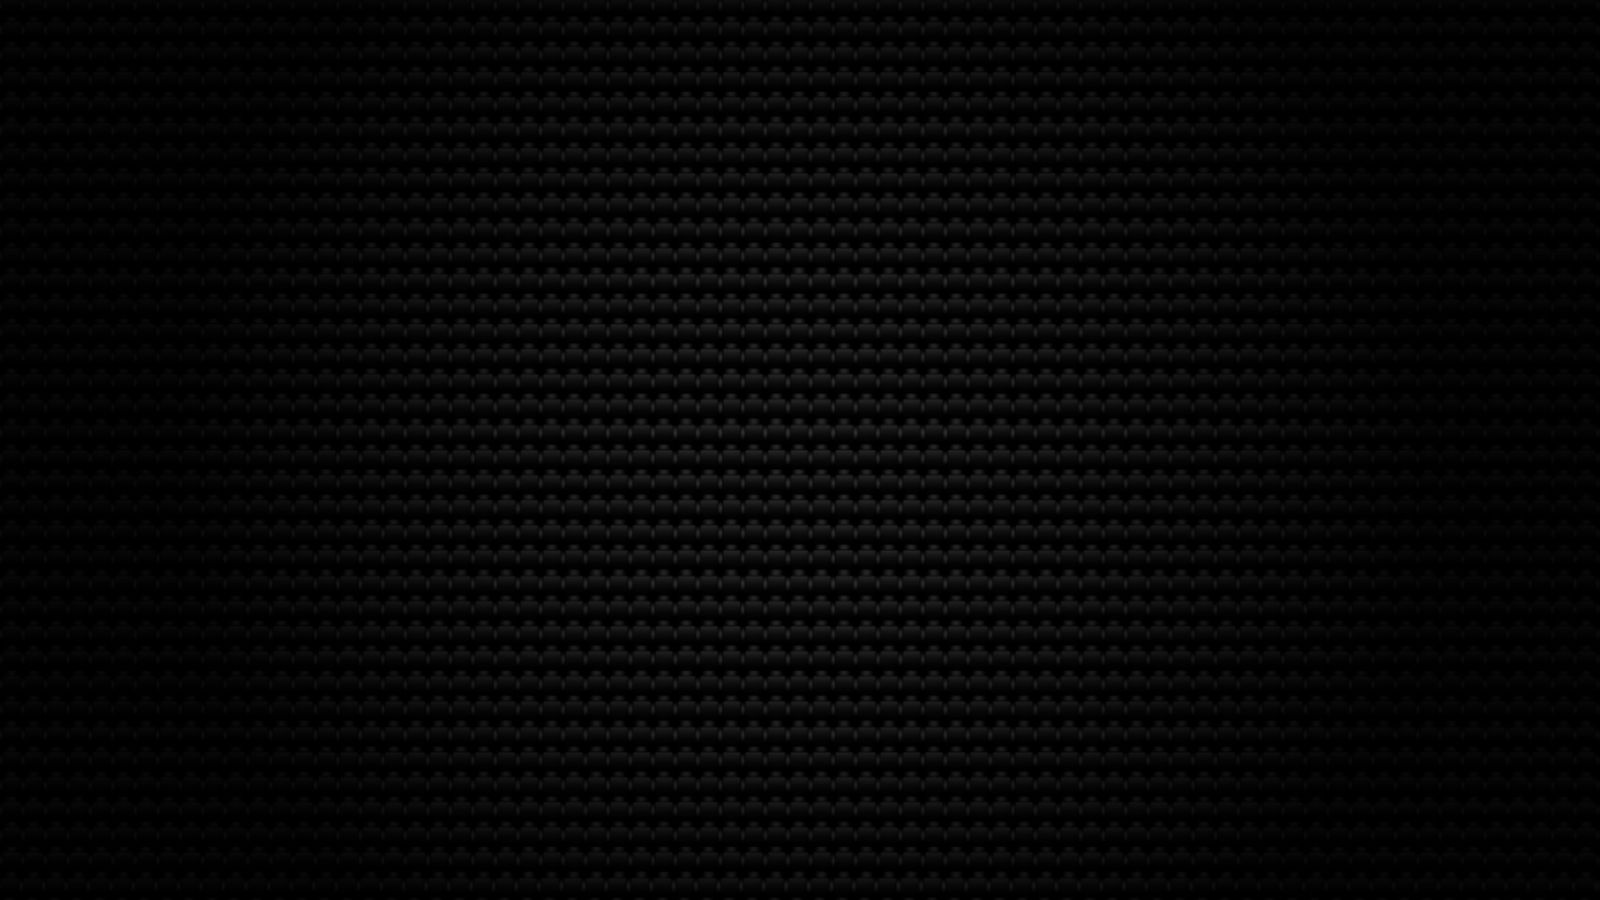 Download wallpaper 1600x900 texture, black, background widescreen 16:9 hd  background